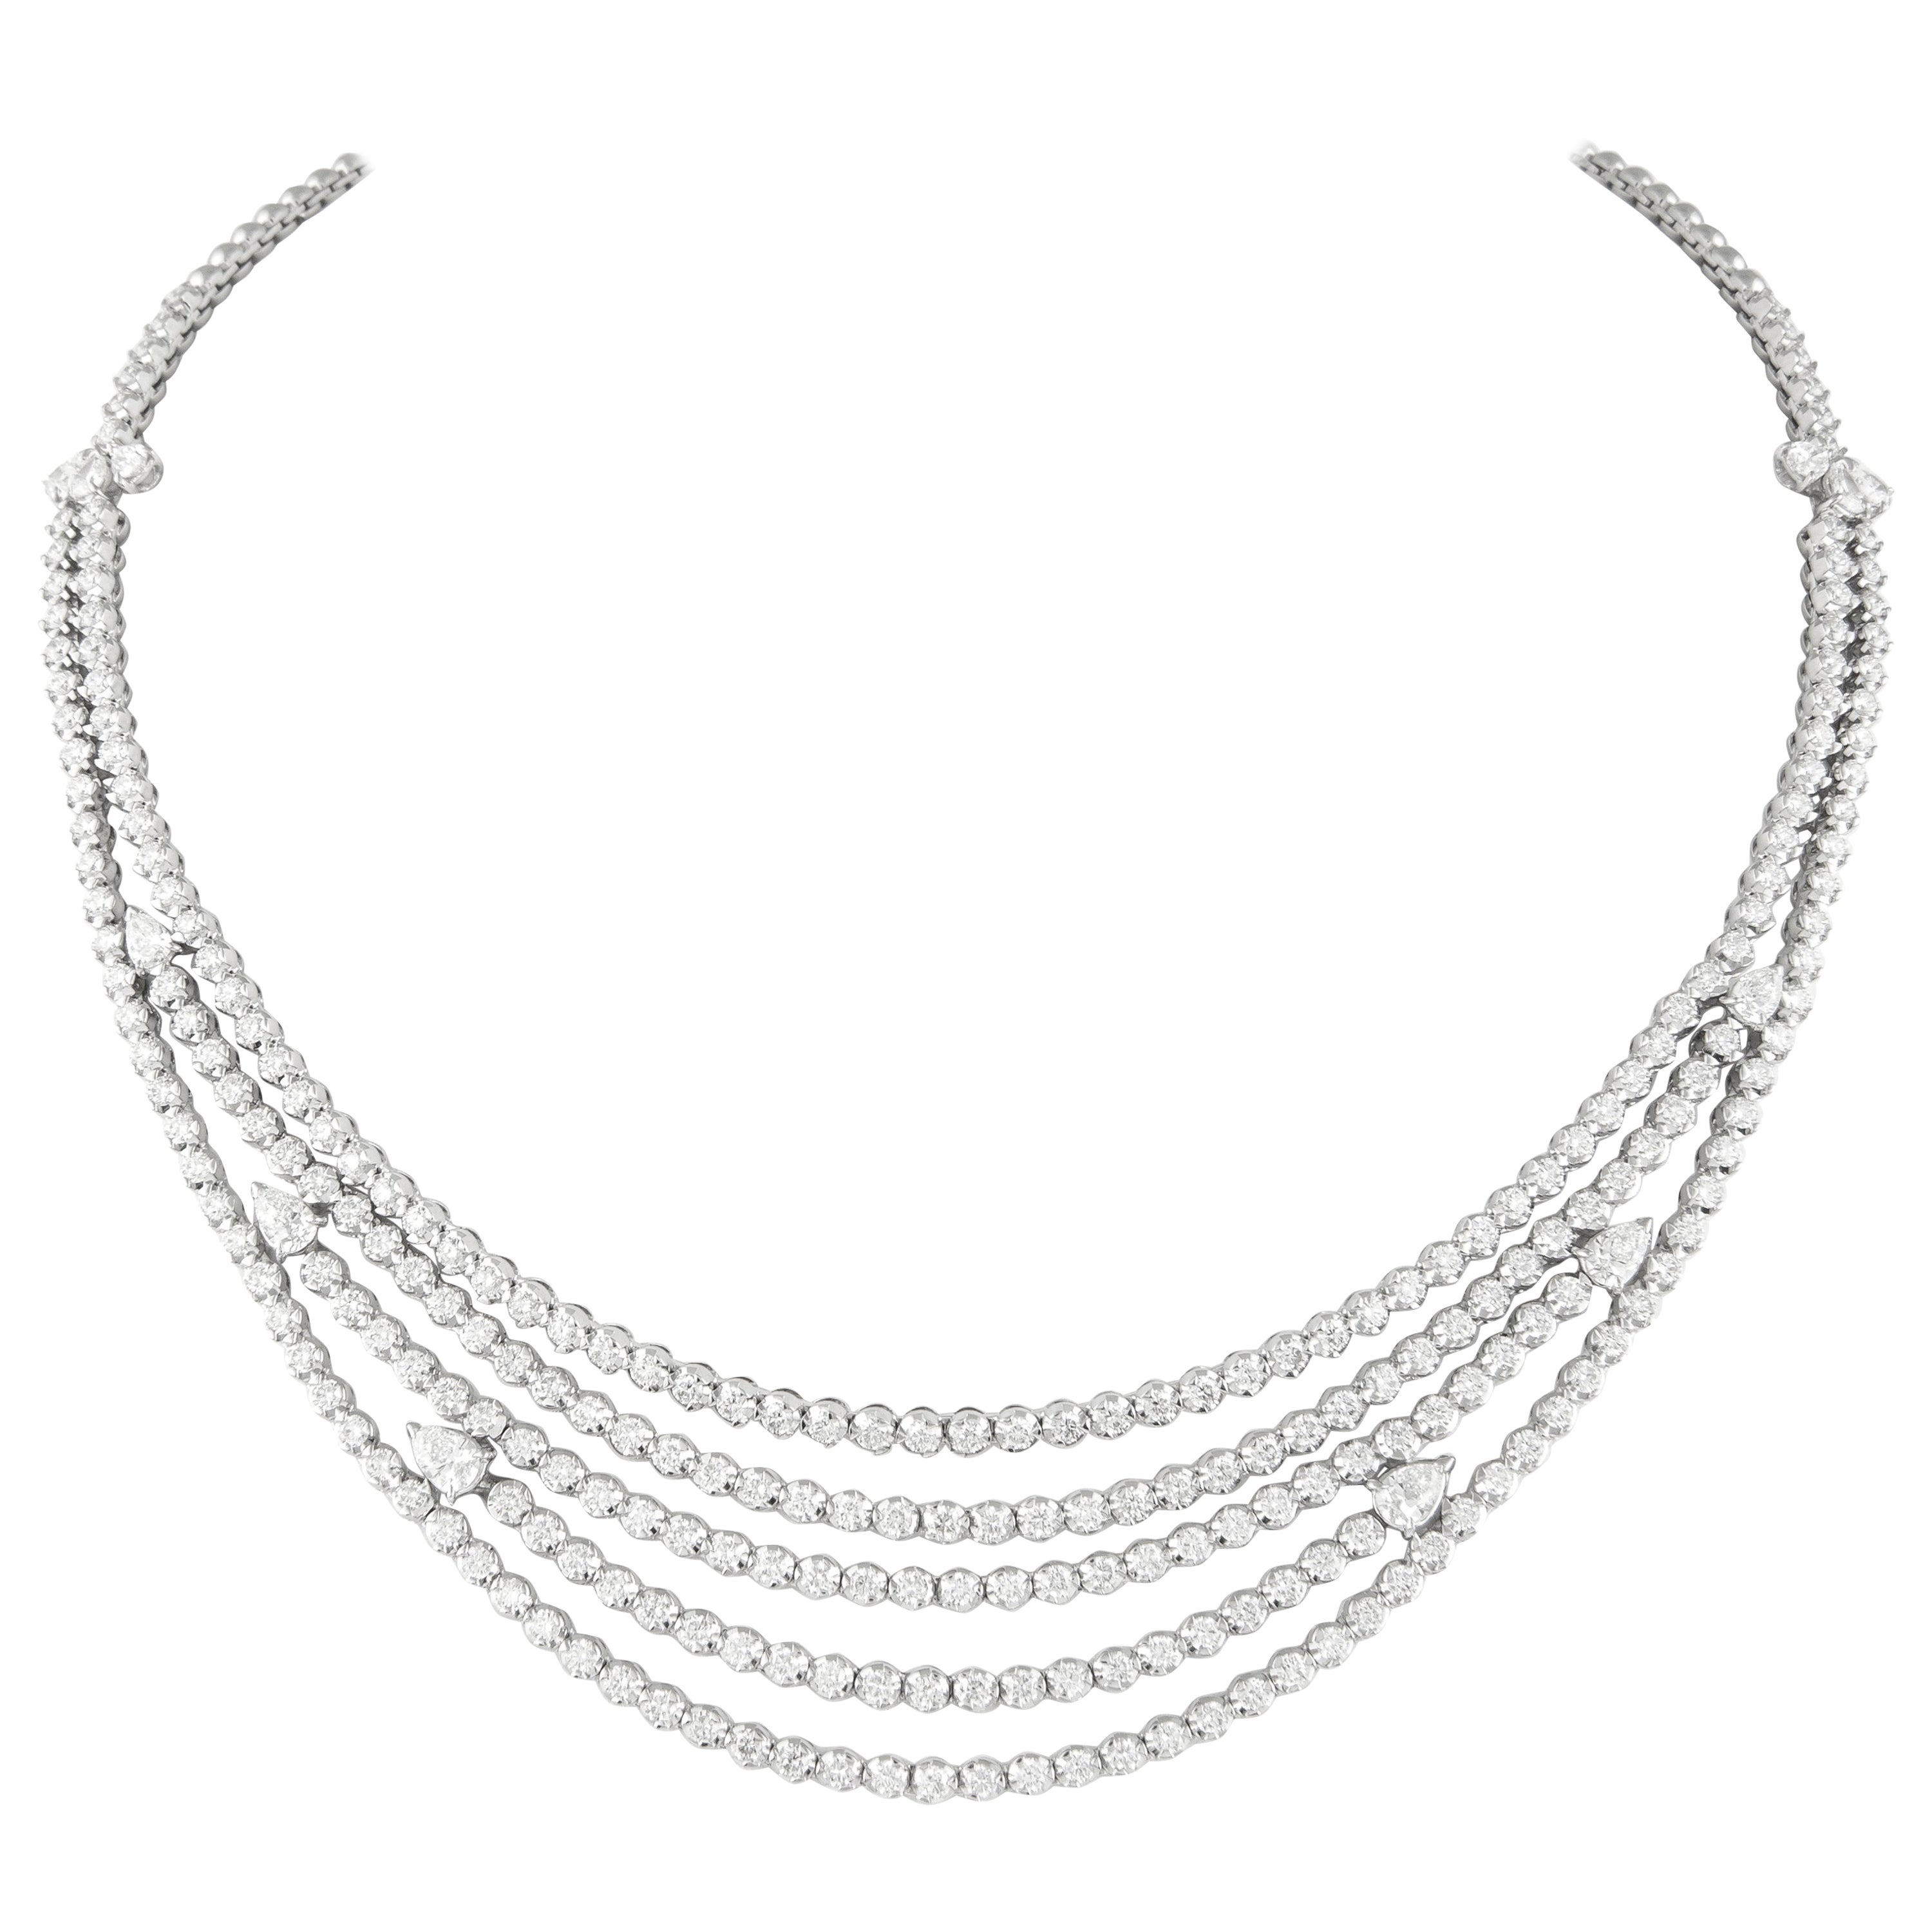 Alexander 11.83 Carat Diamond White Gold 5-Row Tennis Necklace